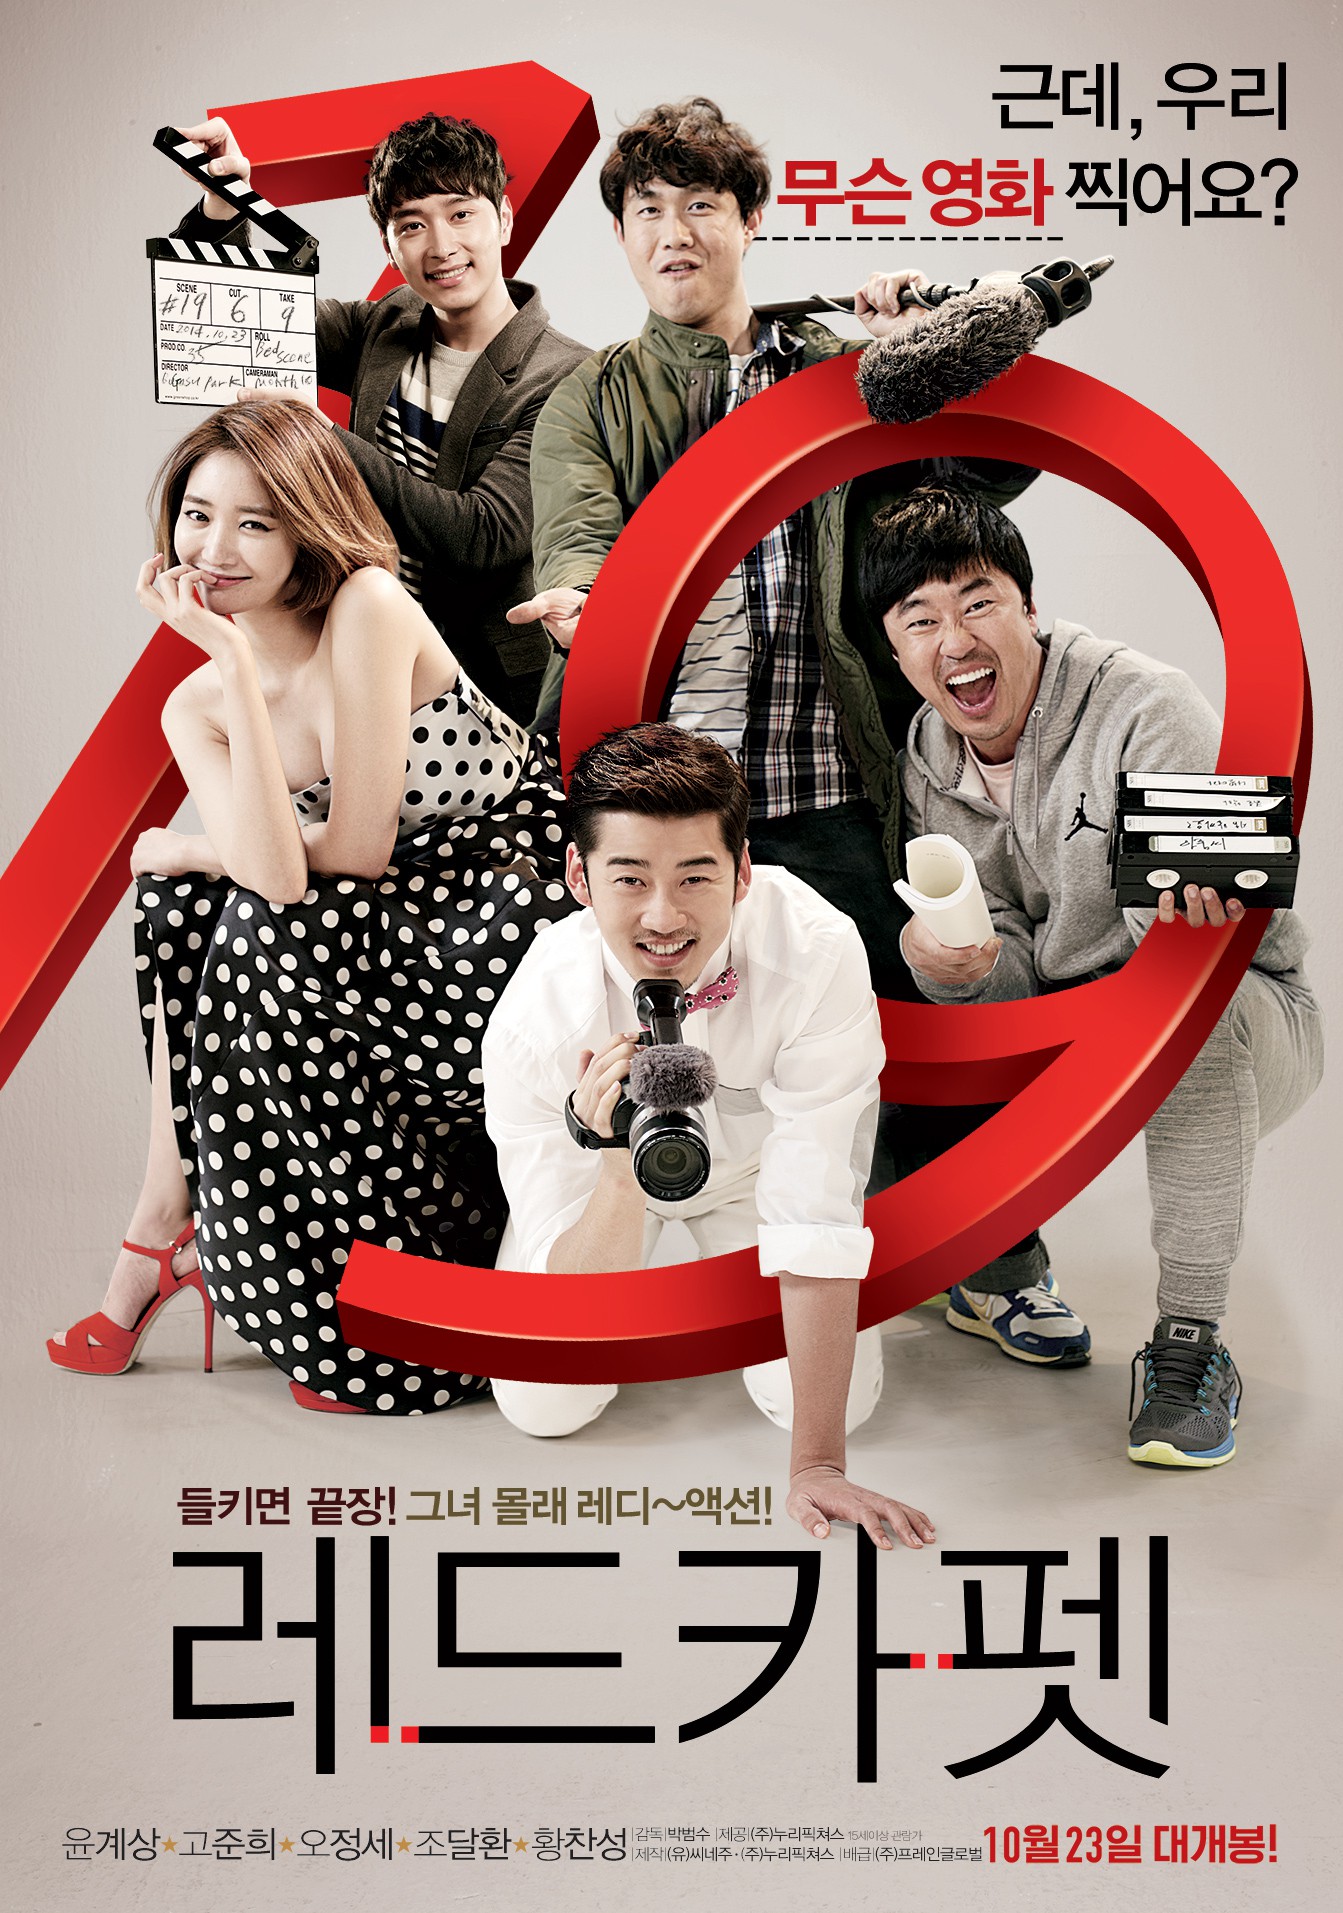 Red_Carpet_-_Korean_Movie-p1.jpg